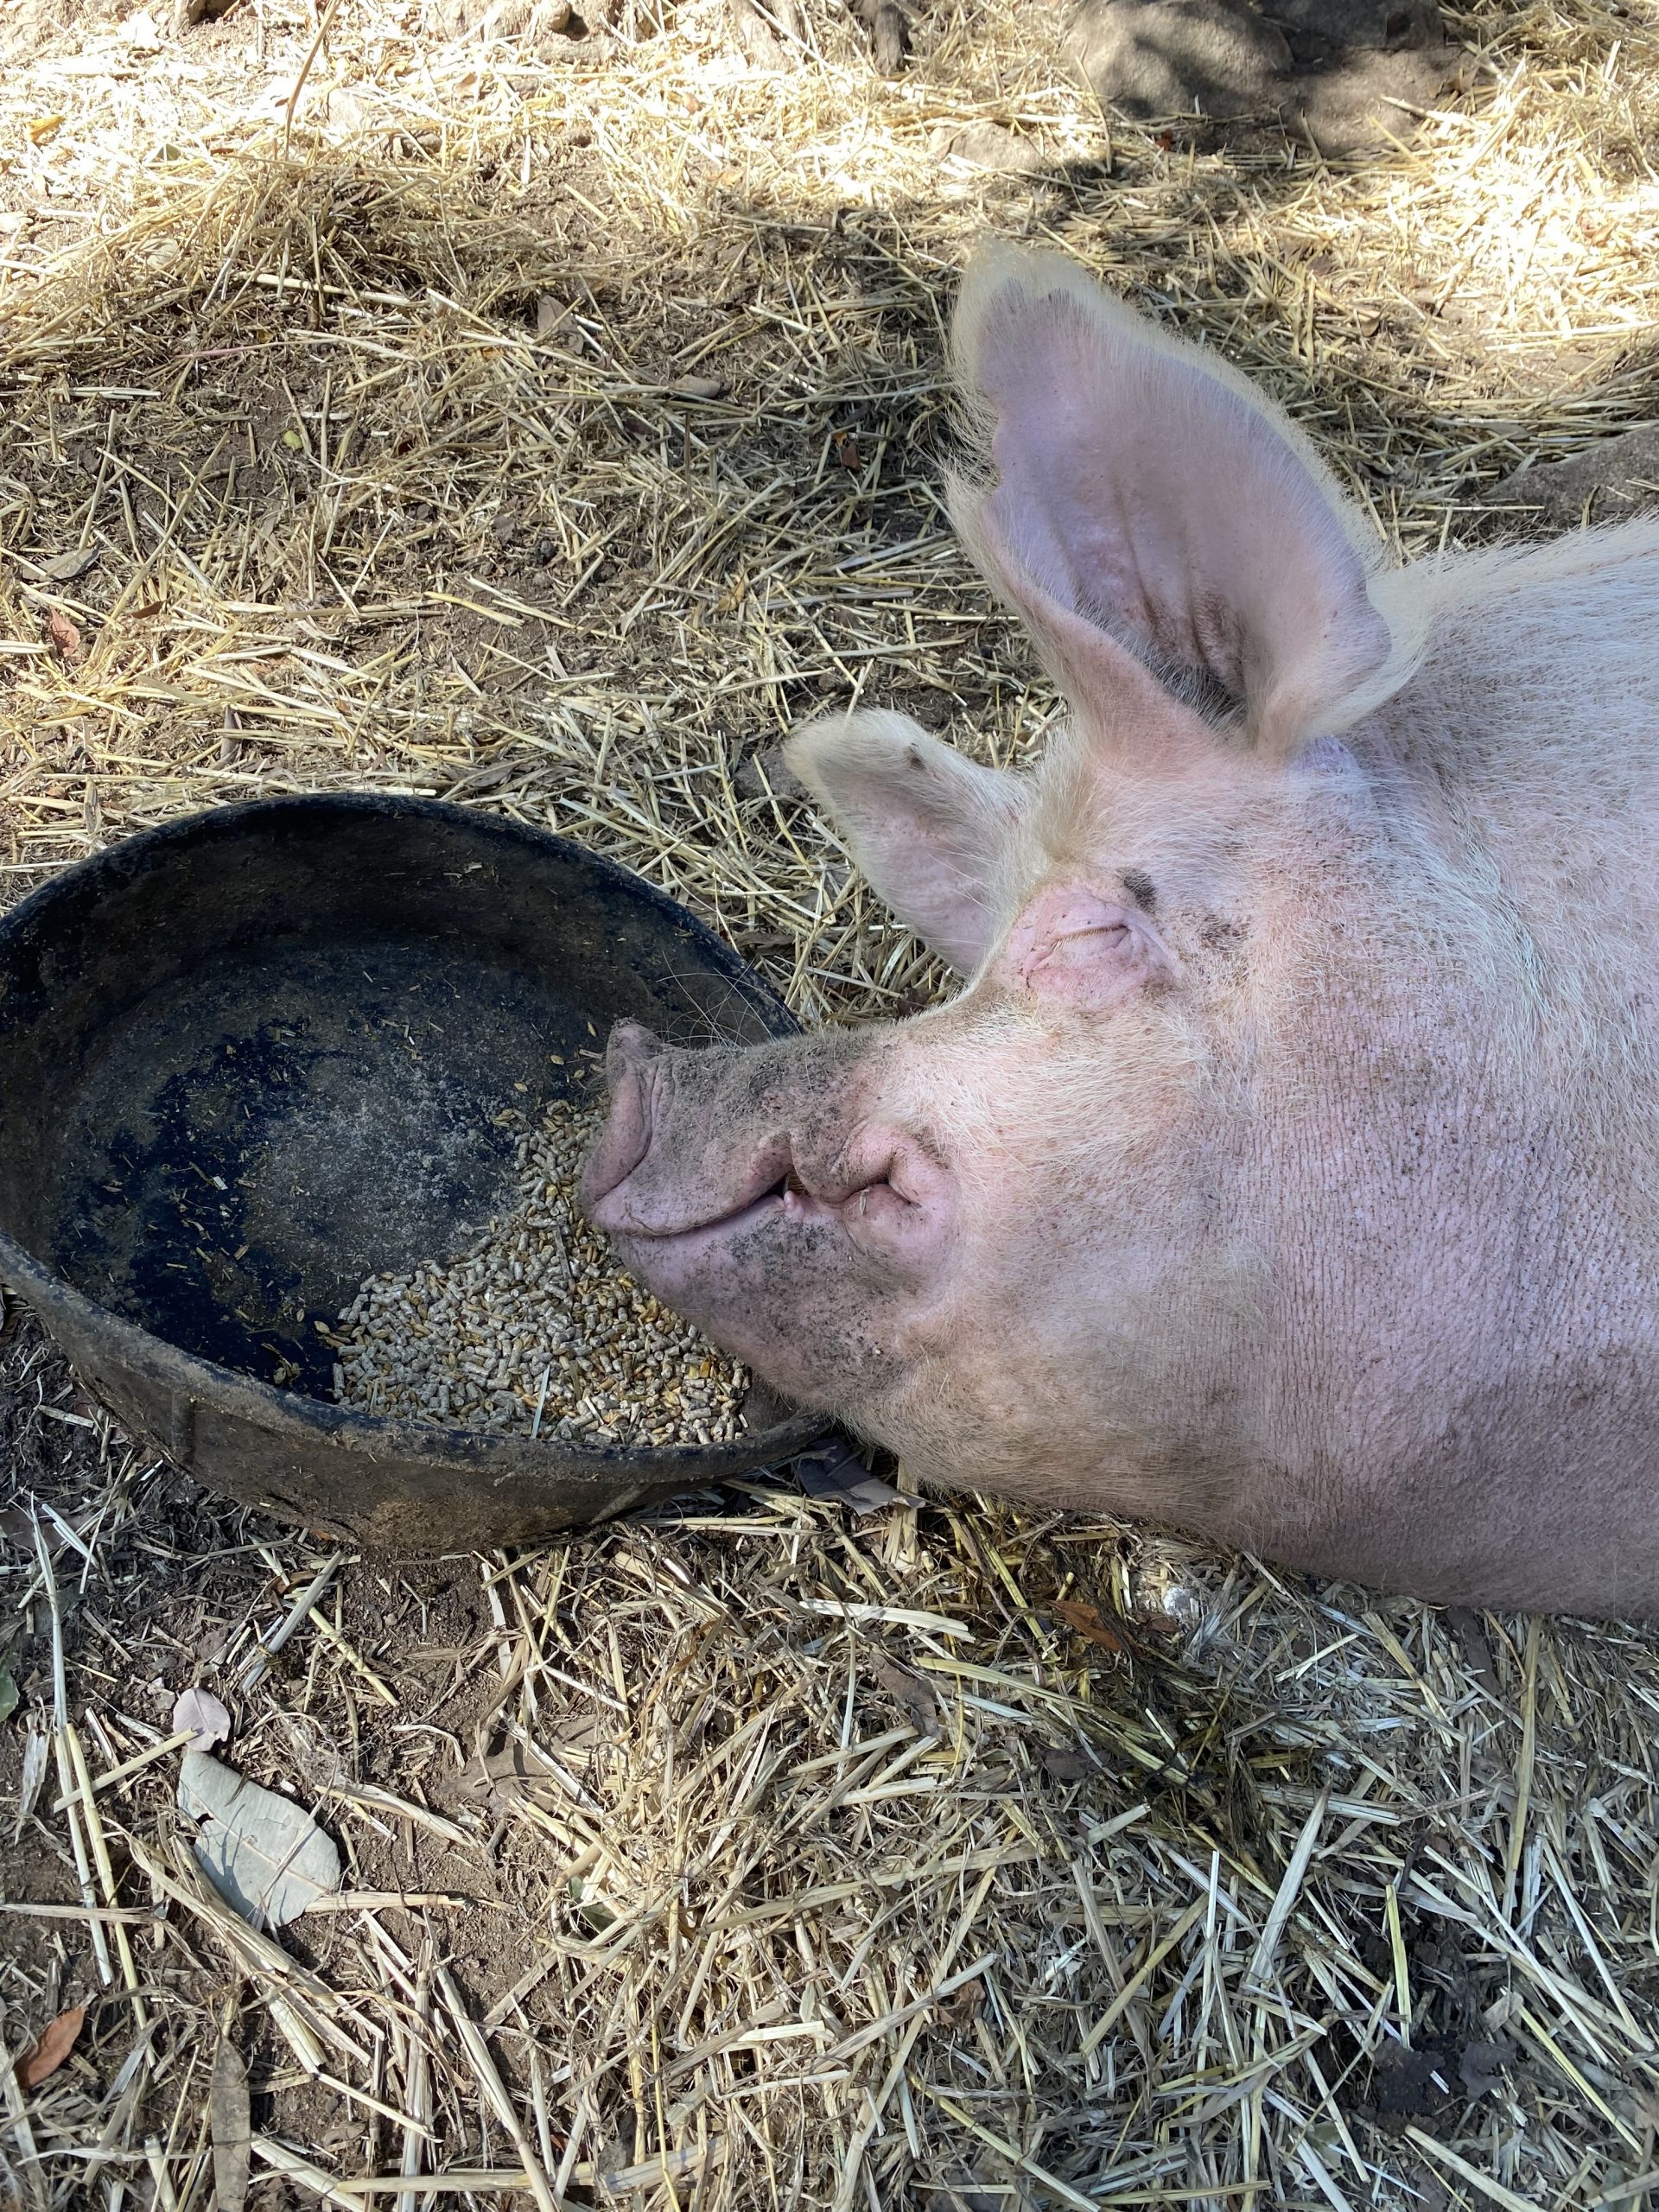 Pig with head in food bowl sleeping